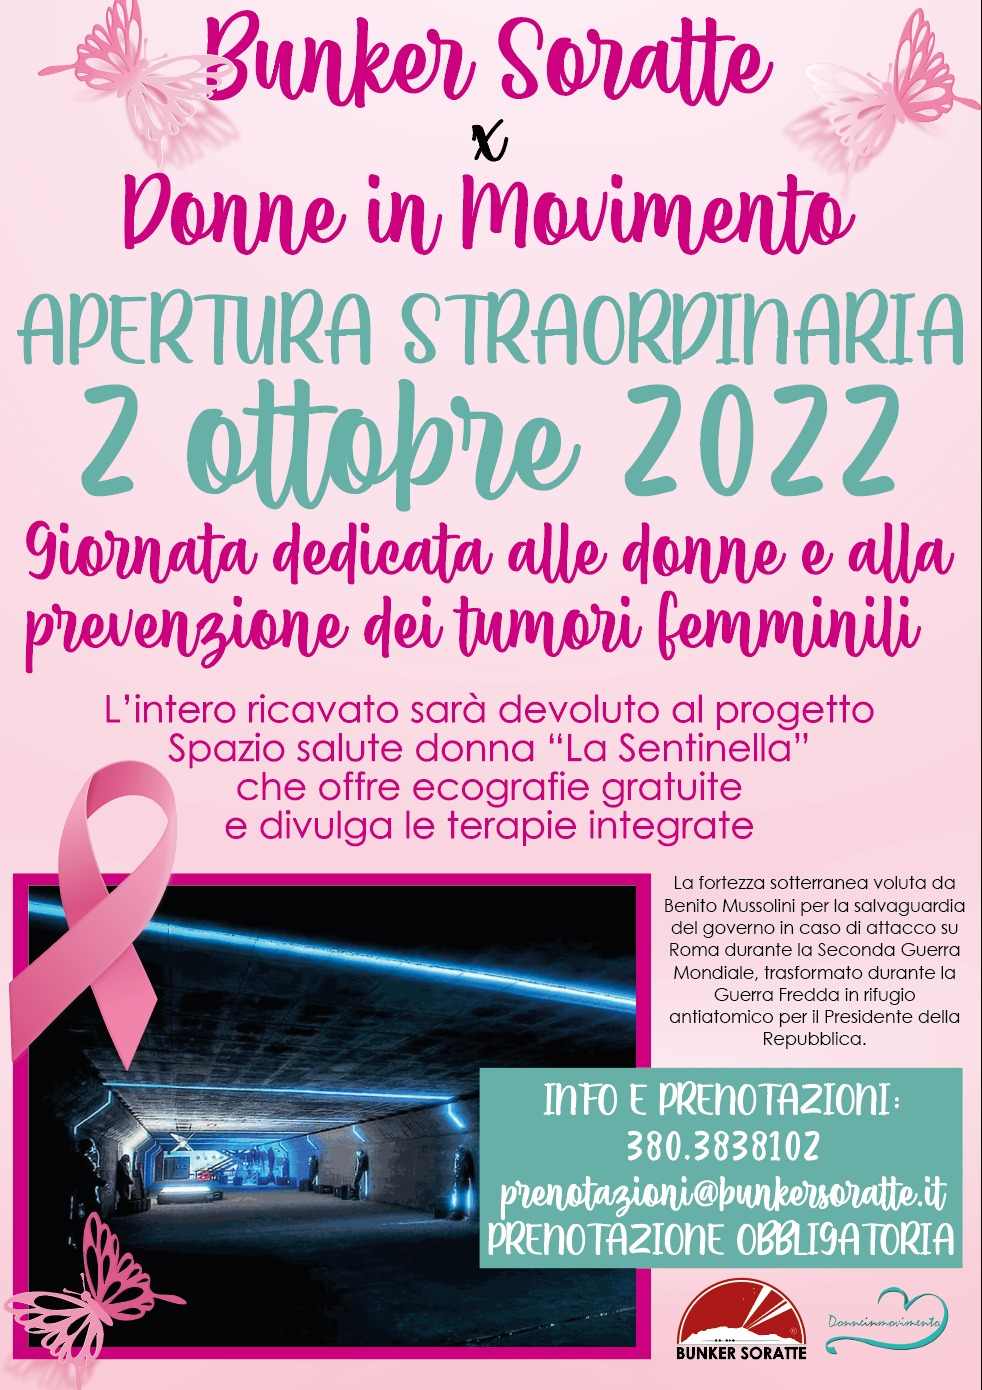 Sant'Oreste - Monte Soratte (RM) 
"Bunker Soratte per Donne in movimento!"
2 Ottobre 2022